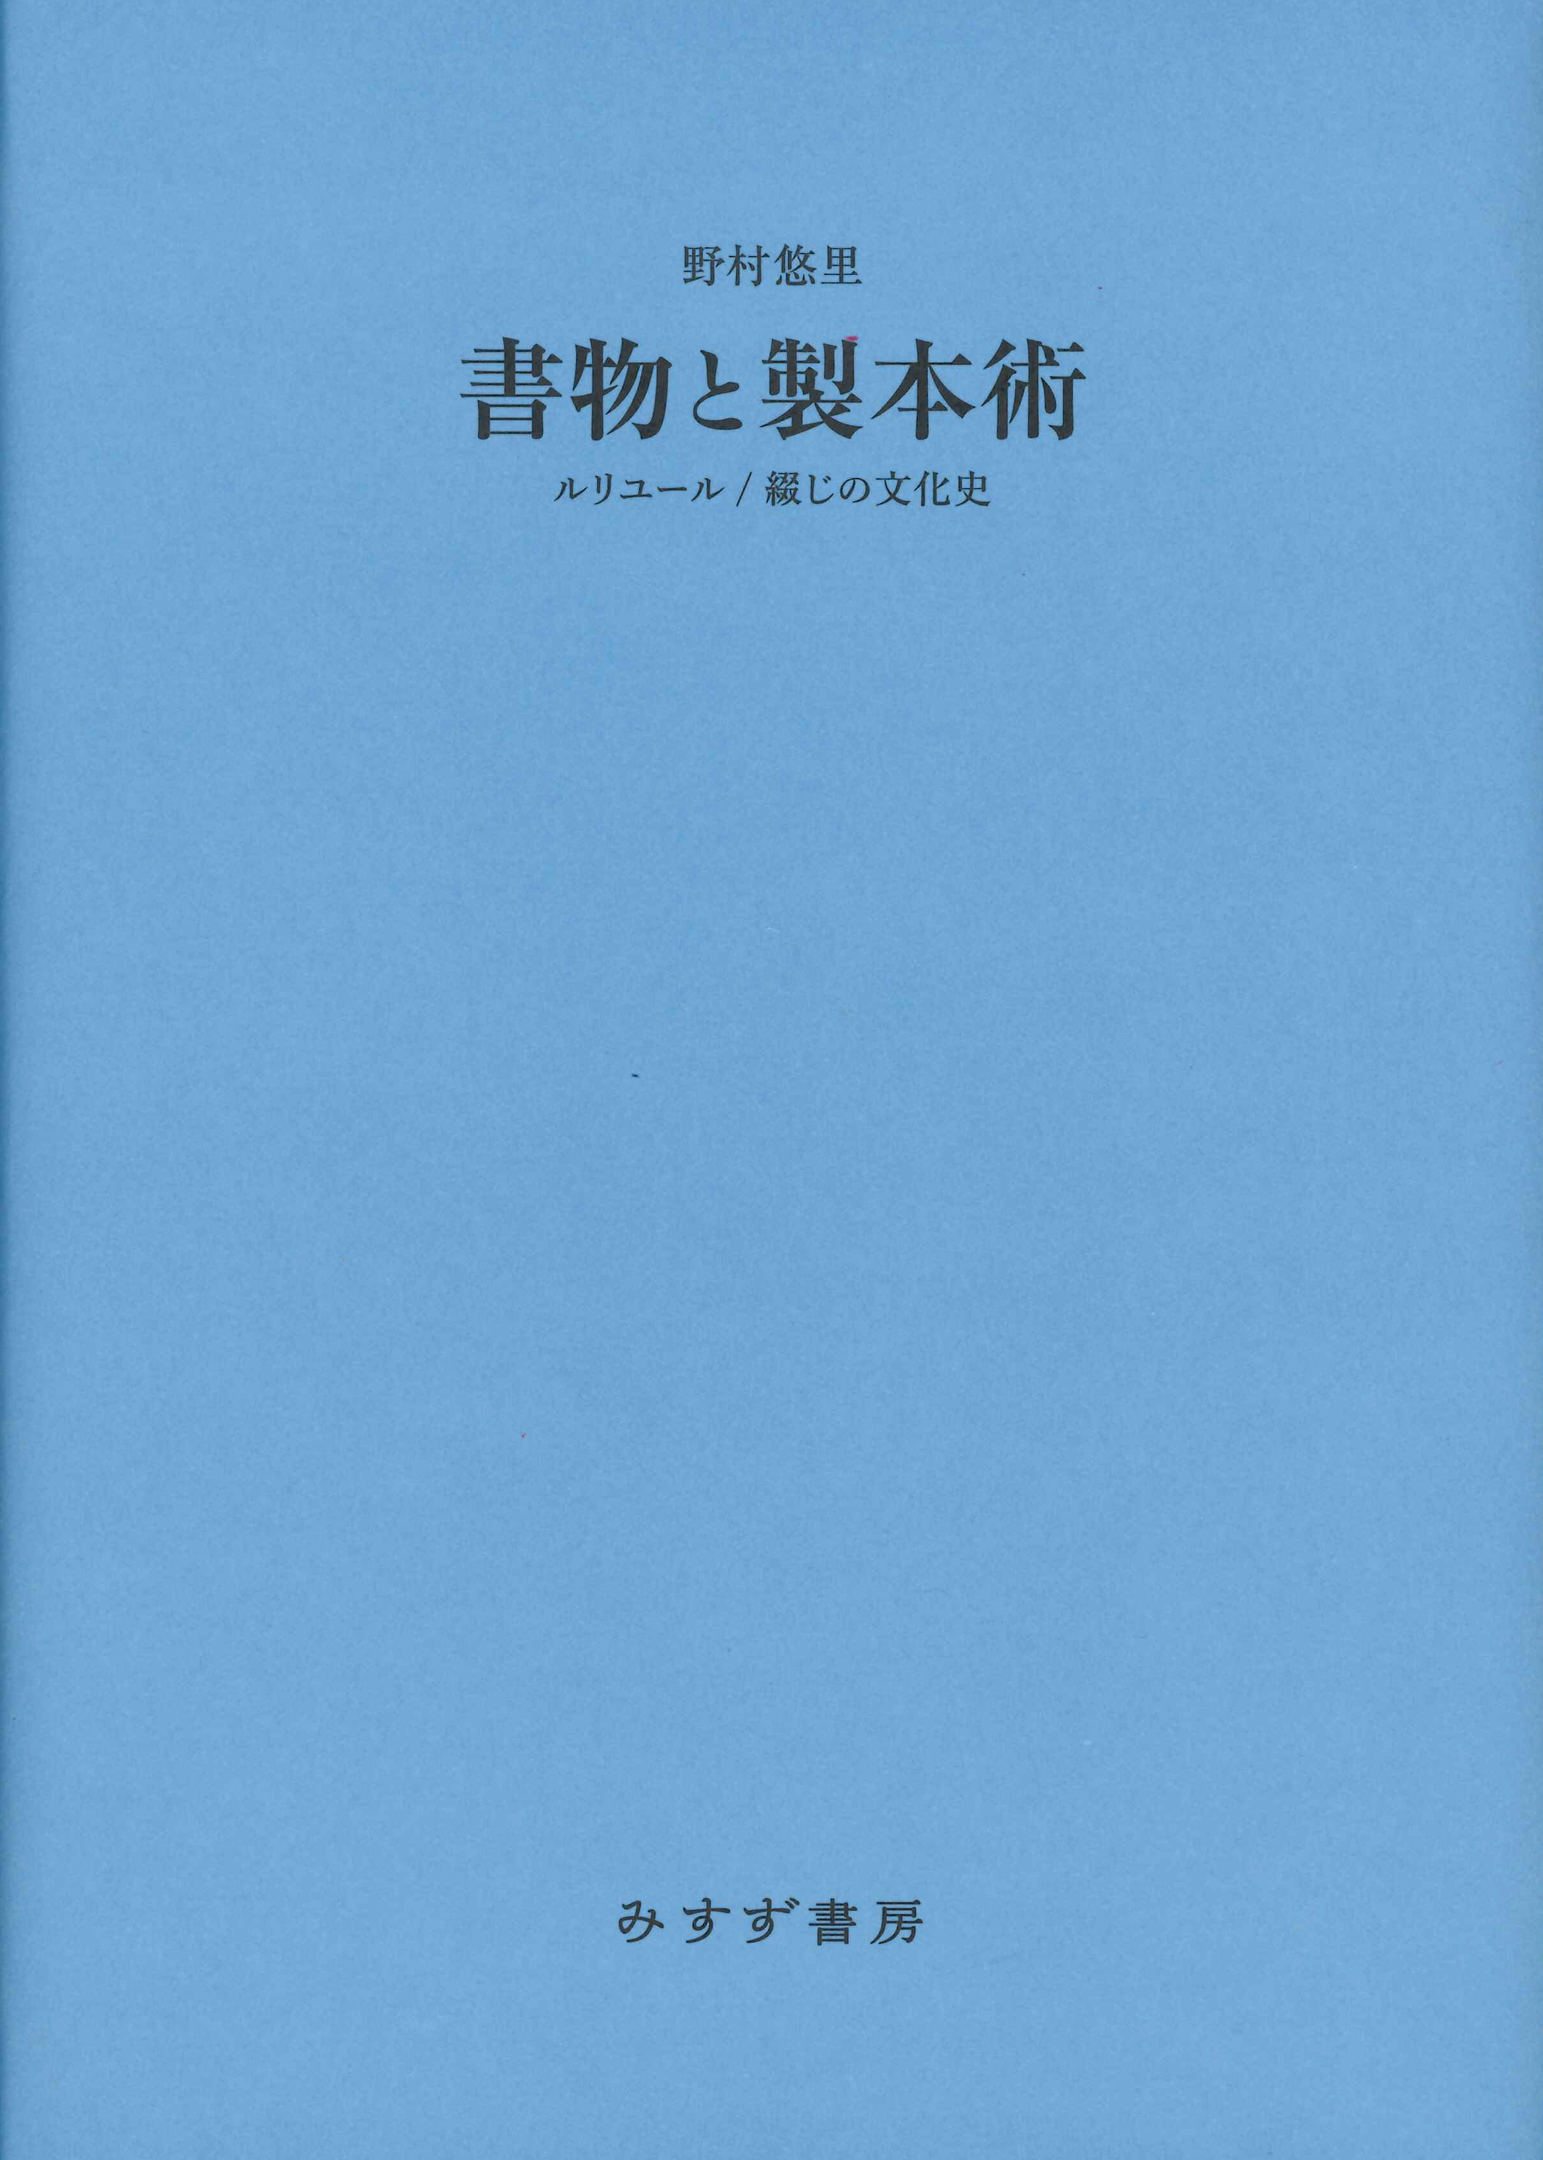 Pastel blue cover